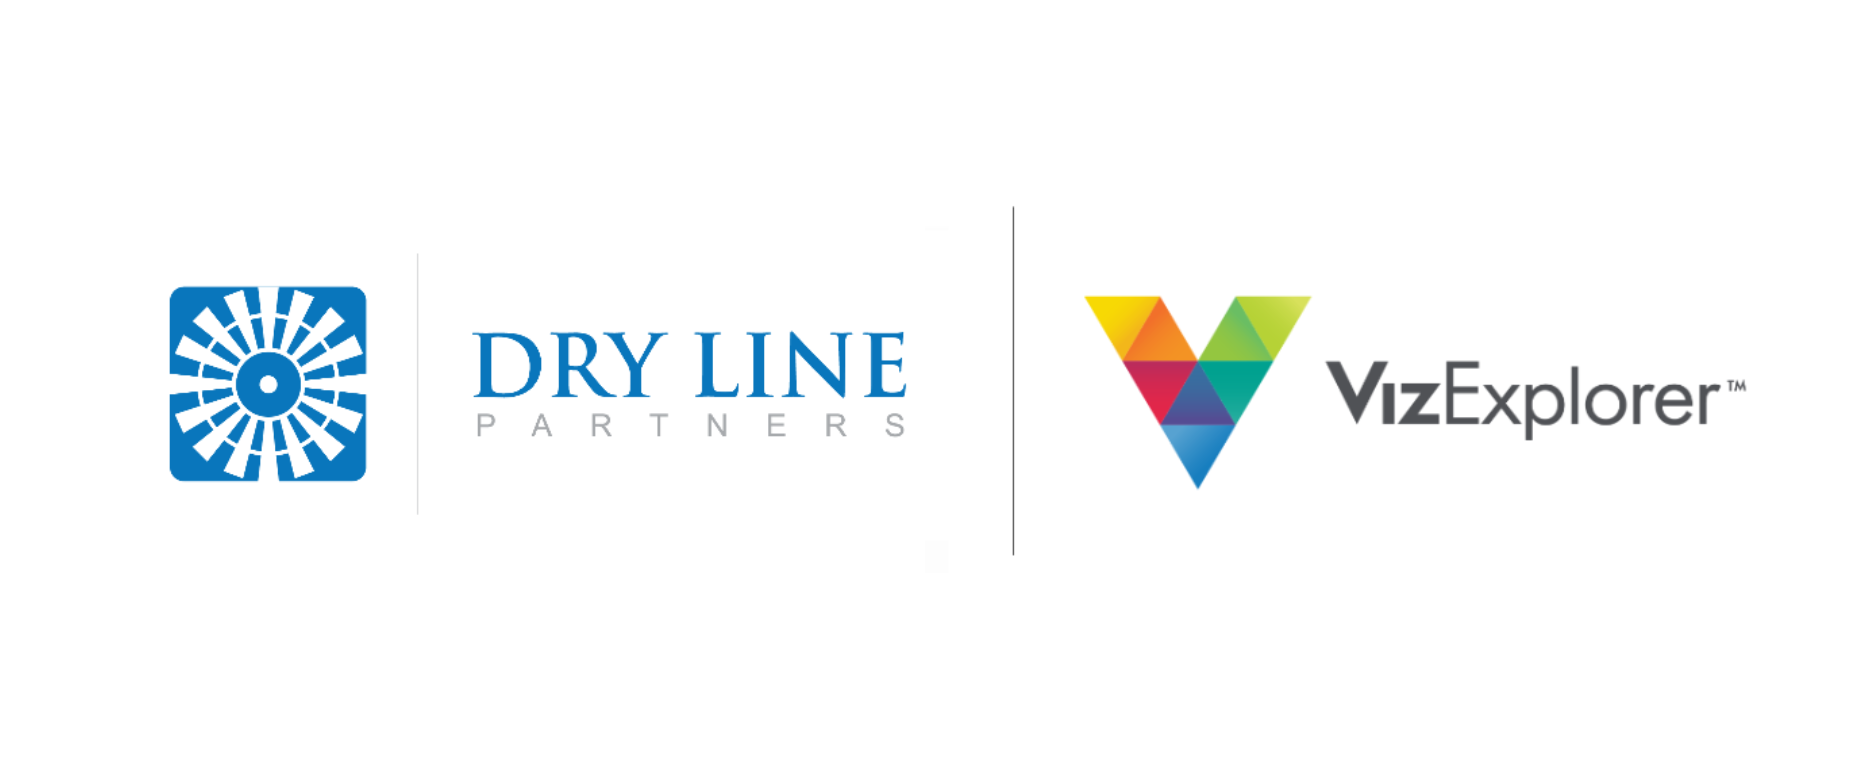 Dry Line Partners LLC and VizExplorer